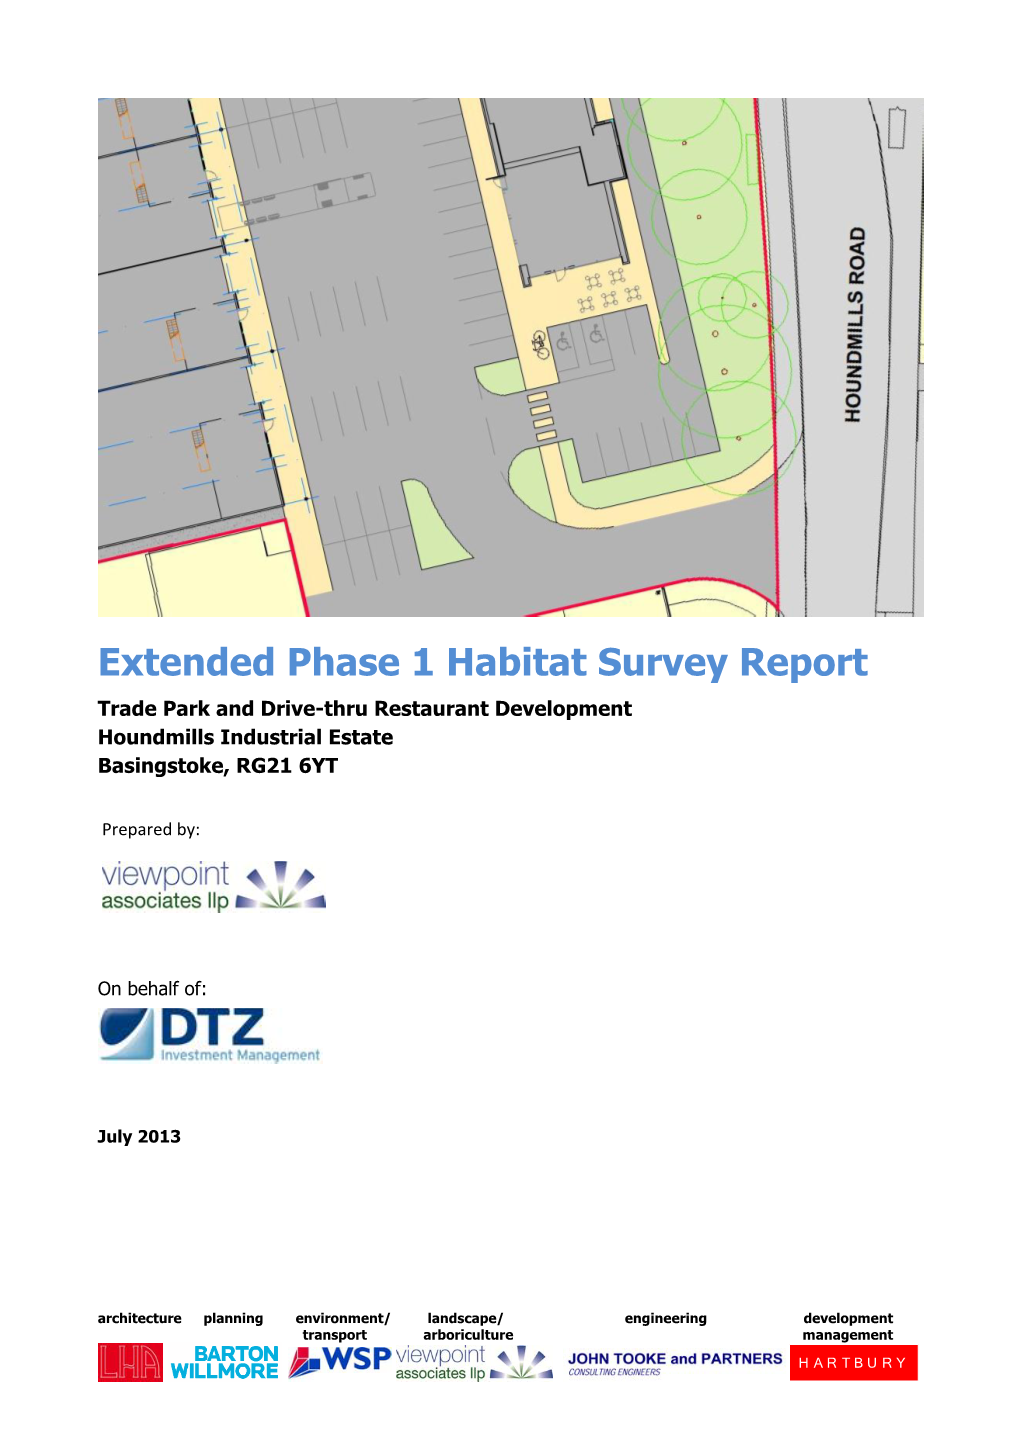 Extended Phase 1 Habitat Survey Report Trade Park and Drive-Thru Restaurant Development Houndmills Industrial Estate Basingstoke, RG21 6YT